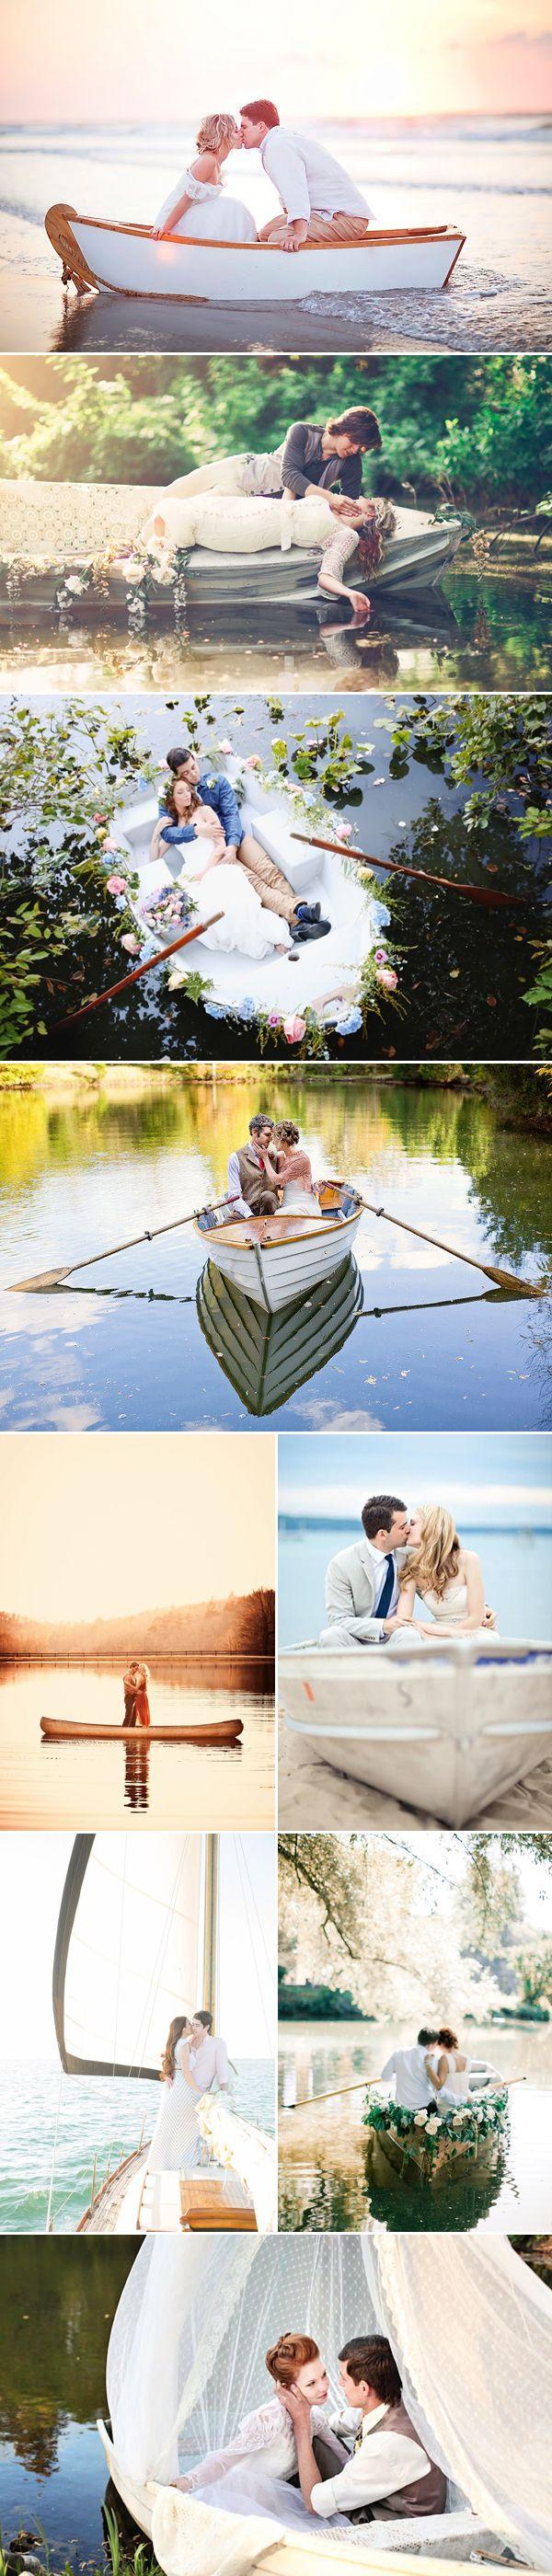 Wedding - Romantic Love-Boat Engagement Photo Ideas — Praise Wedding